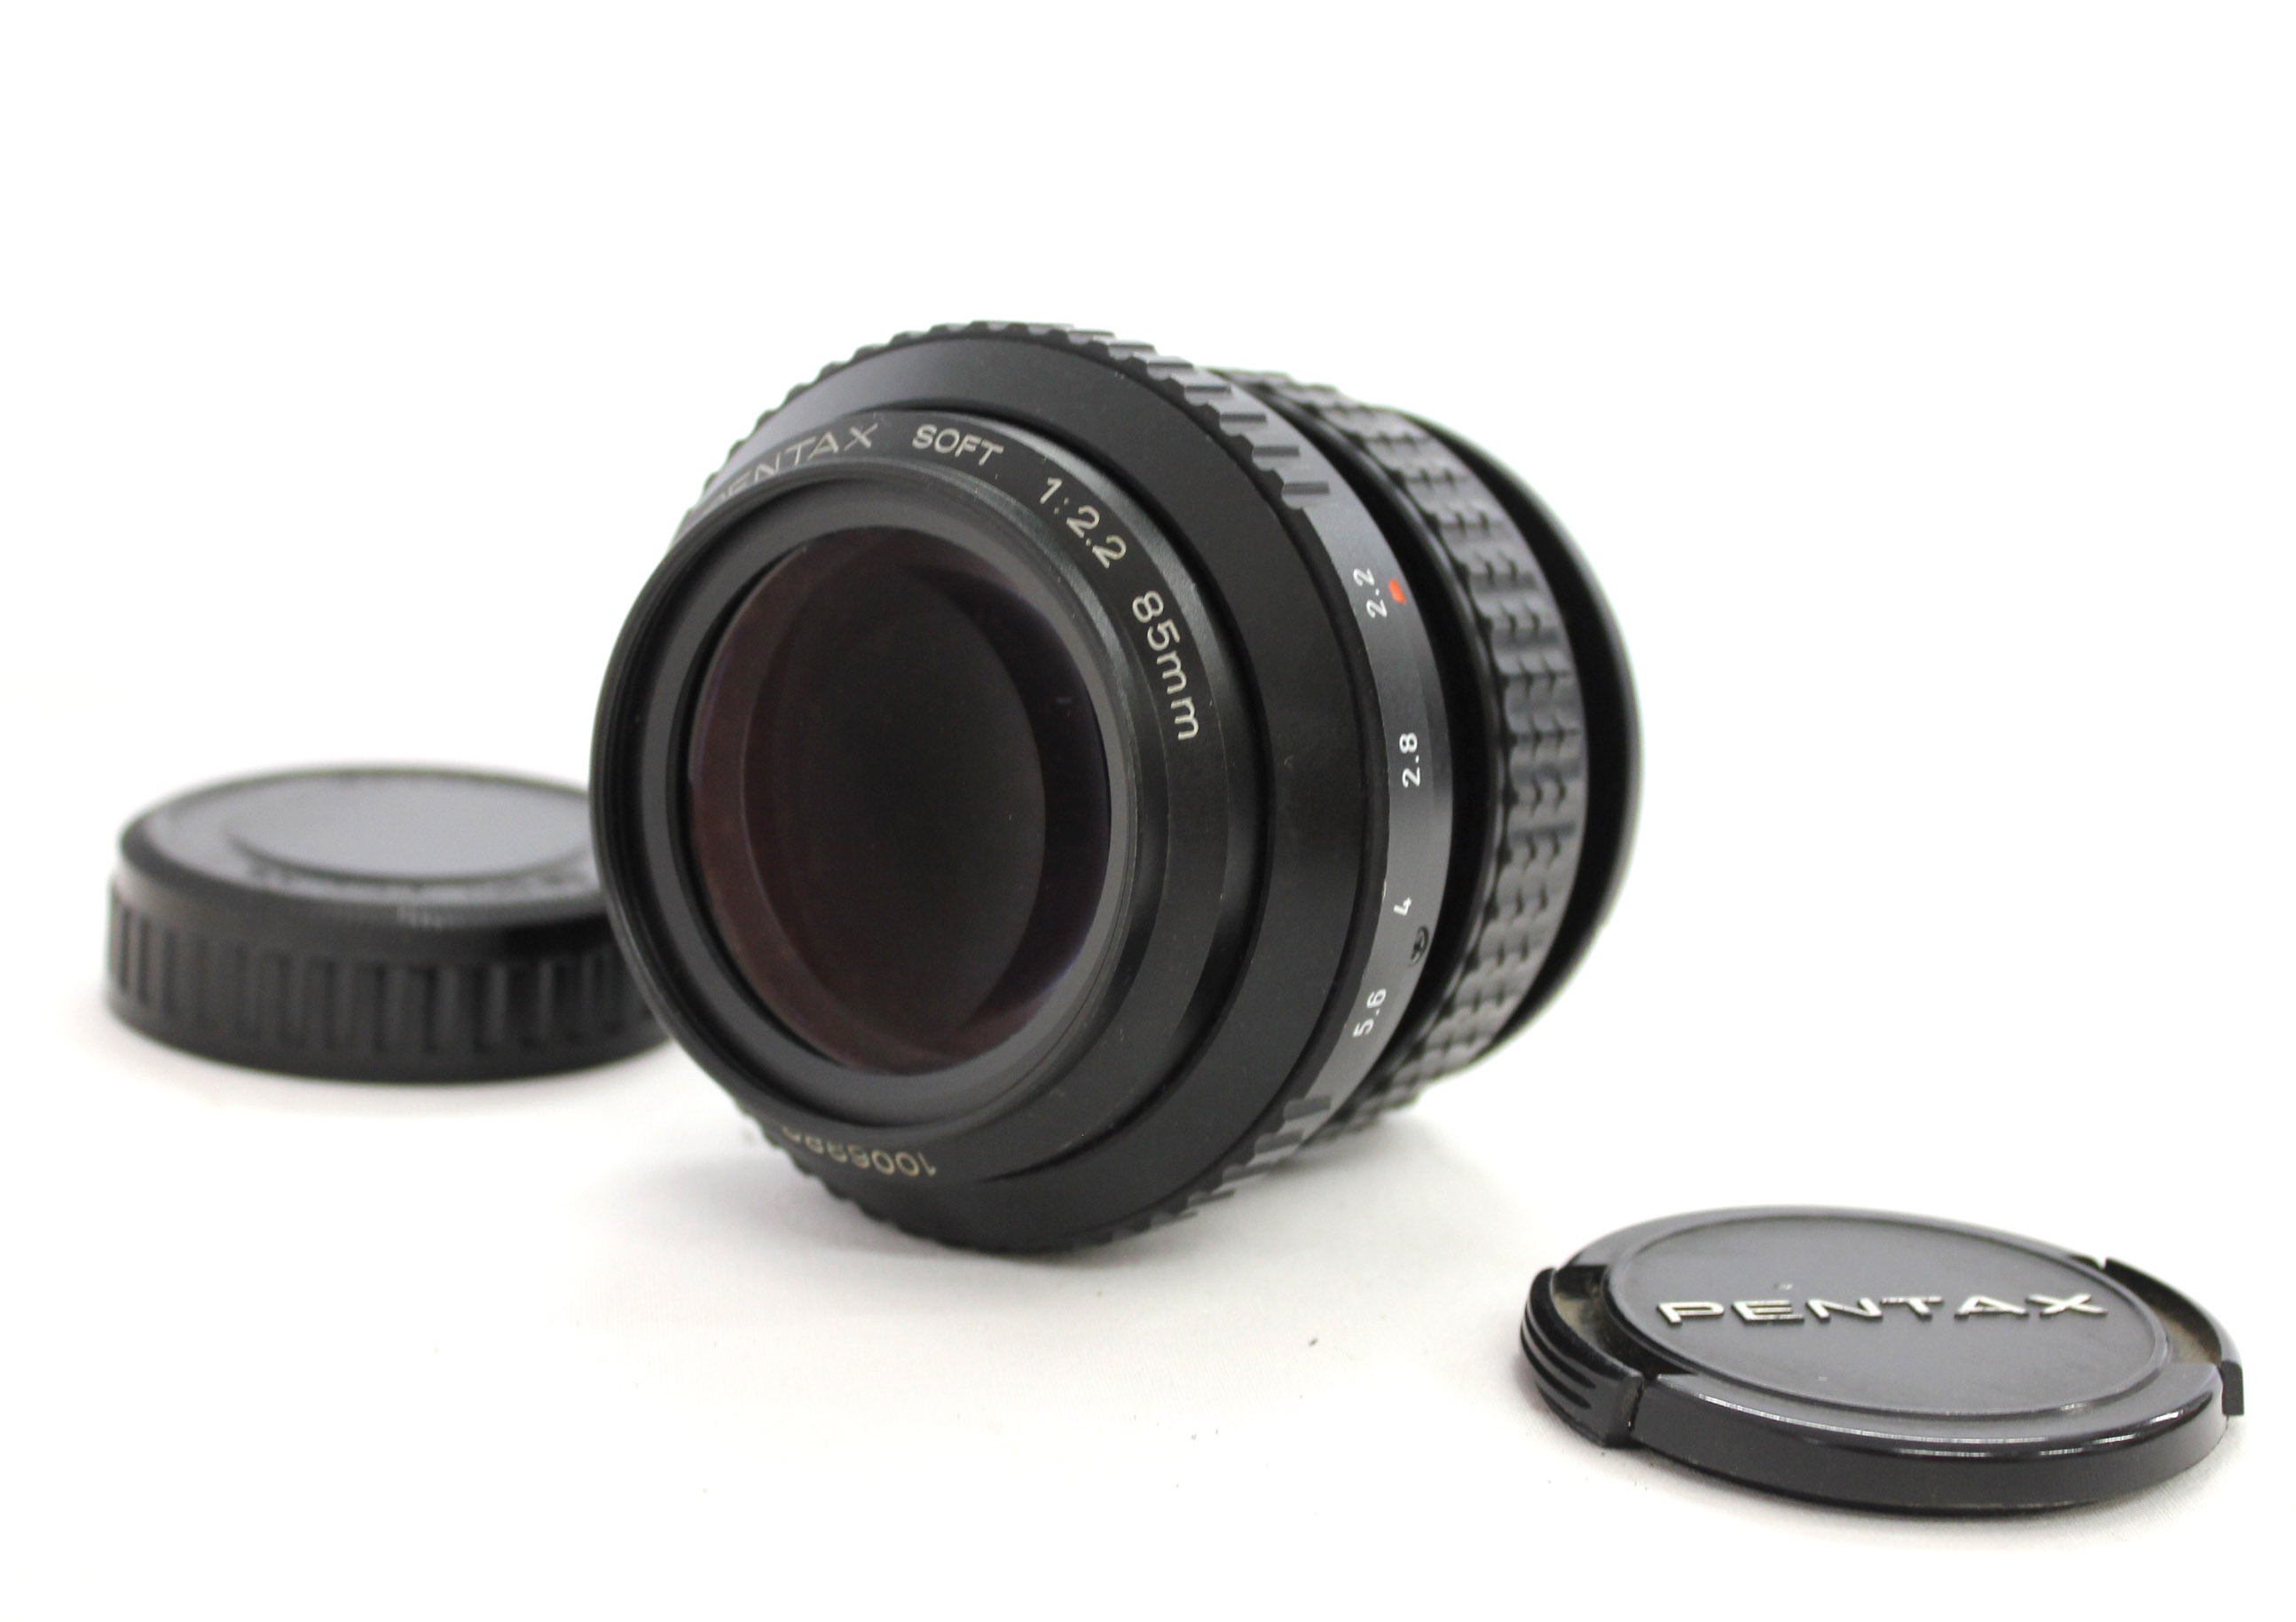 Japan Used Camera Shop | [Near Mint] Pentax SMC Pentax Soft 85mm F/2.2 MF  K Mount Lens from Japan